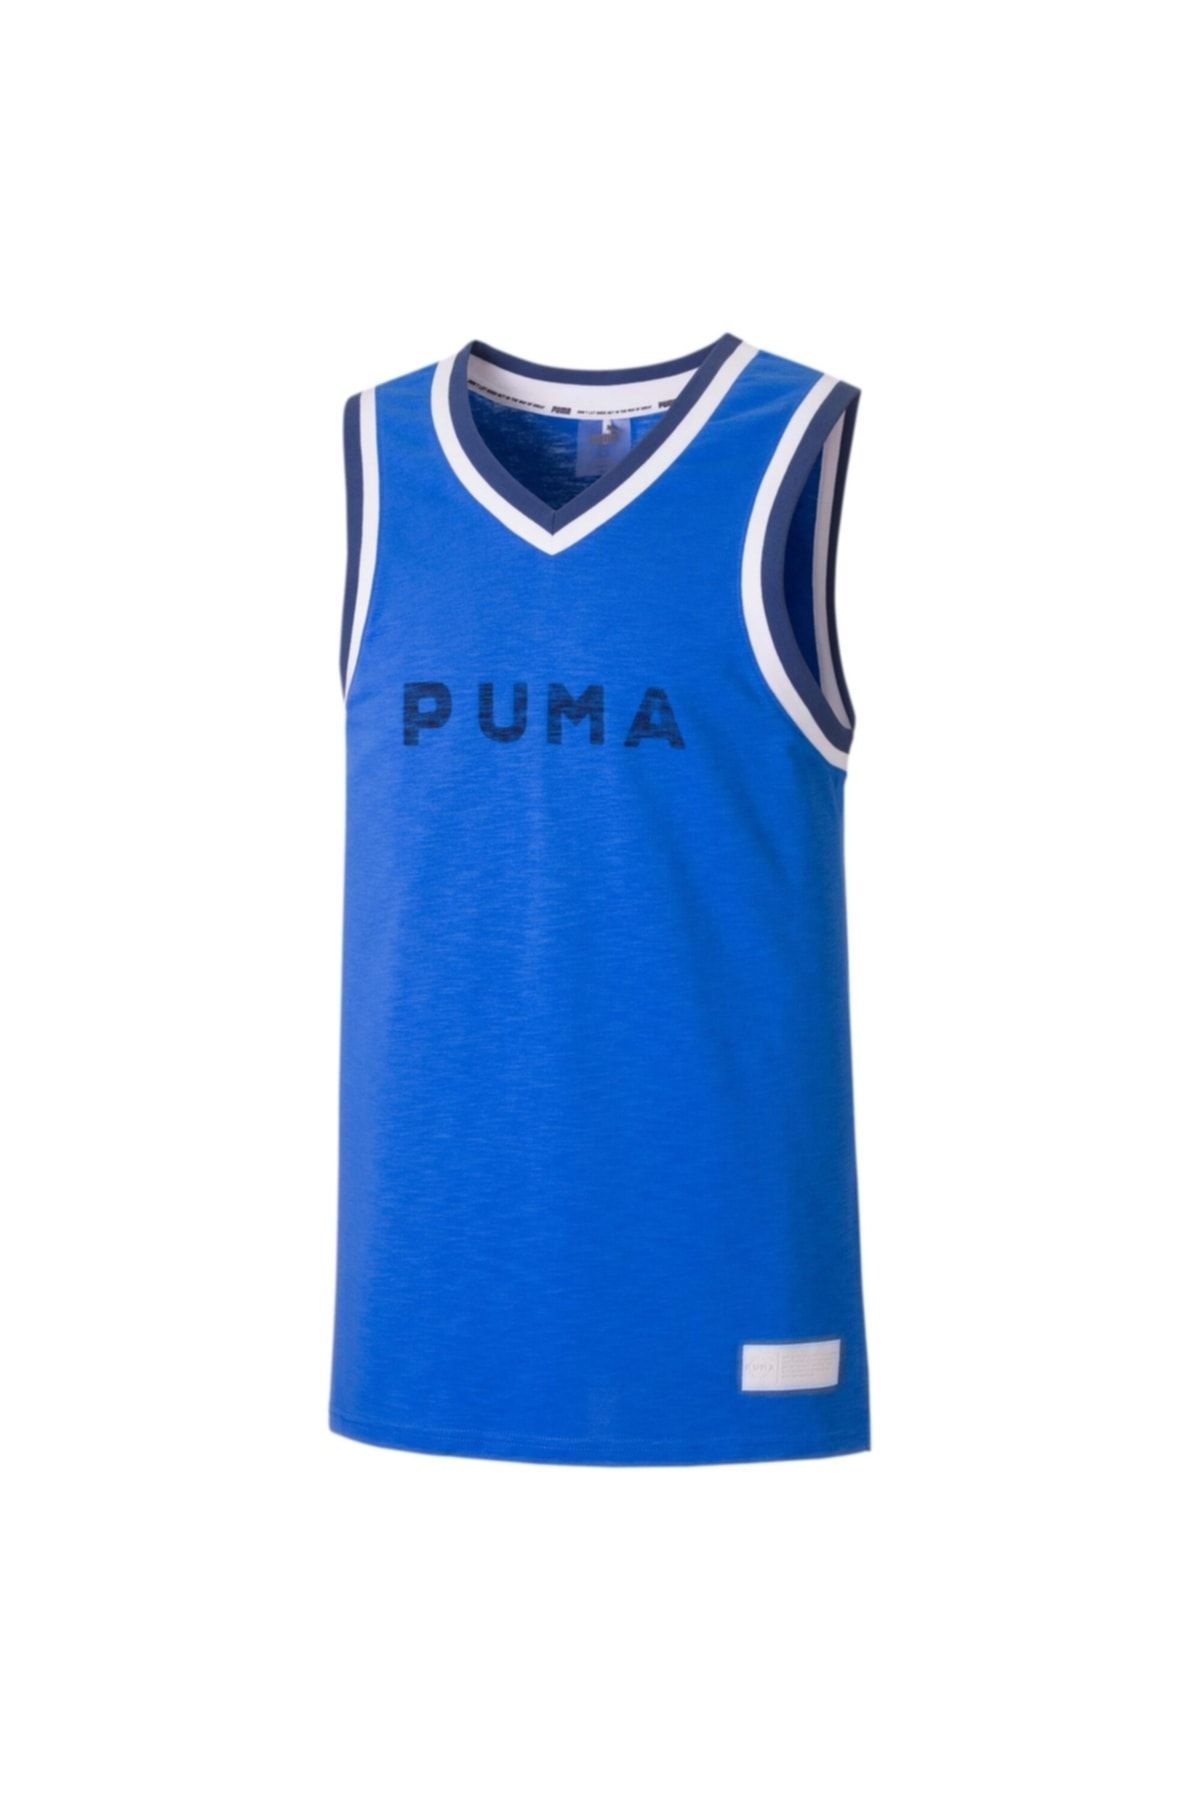 Puma Fadeaway Erkek Basketbol Forması